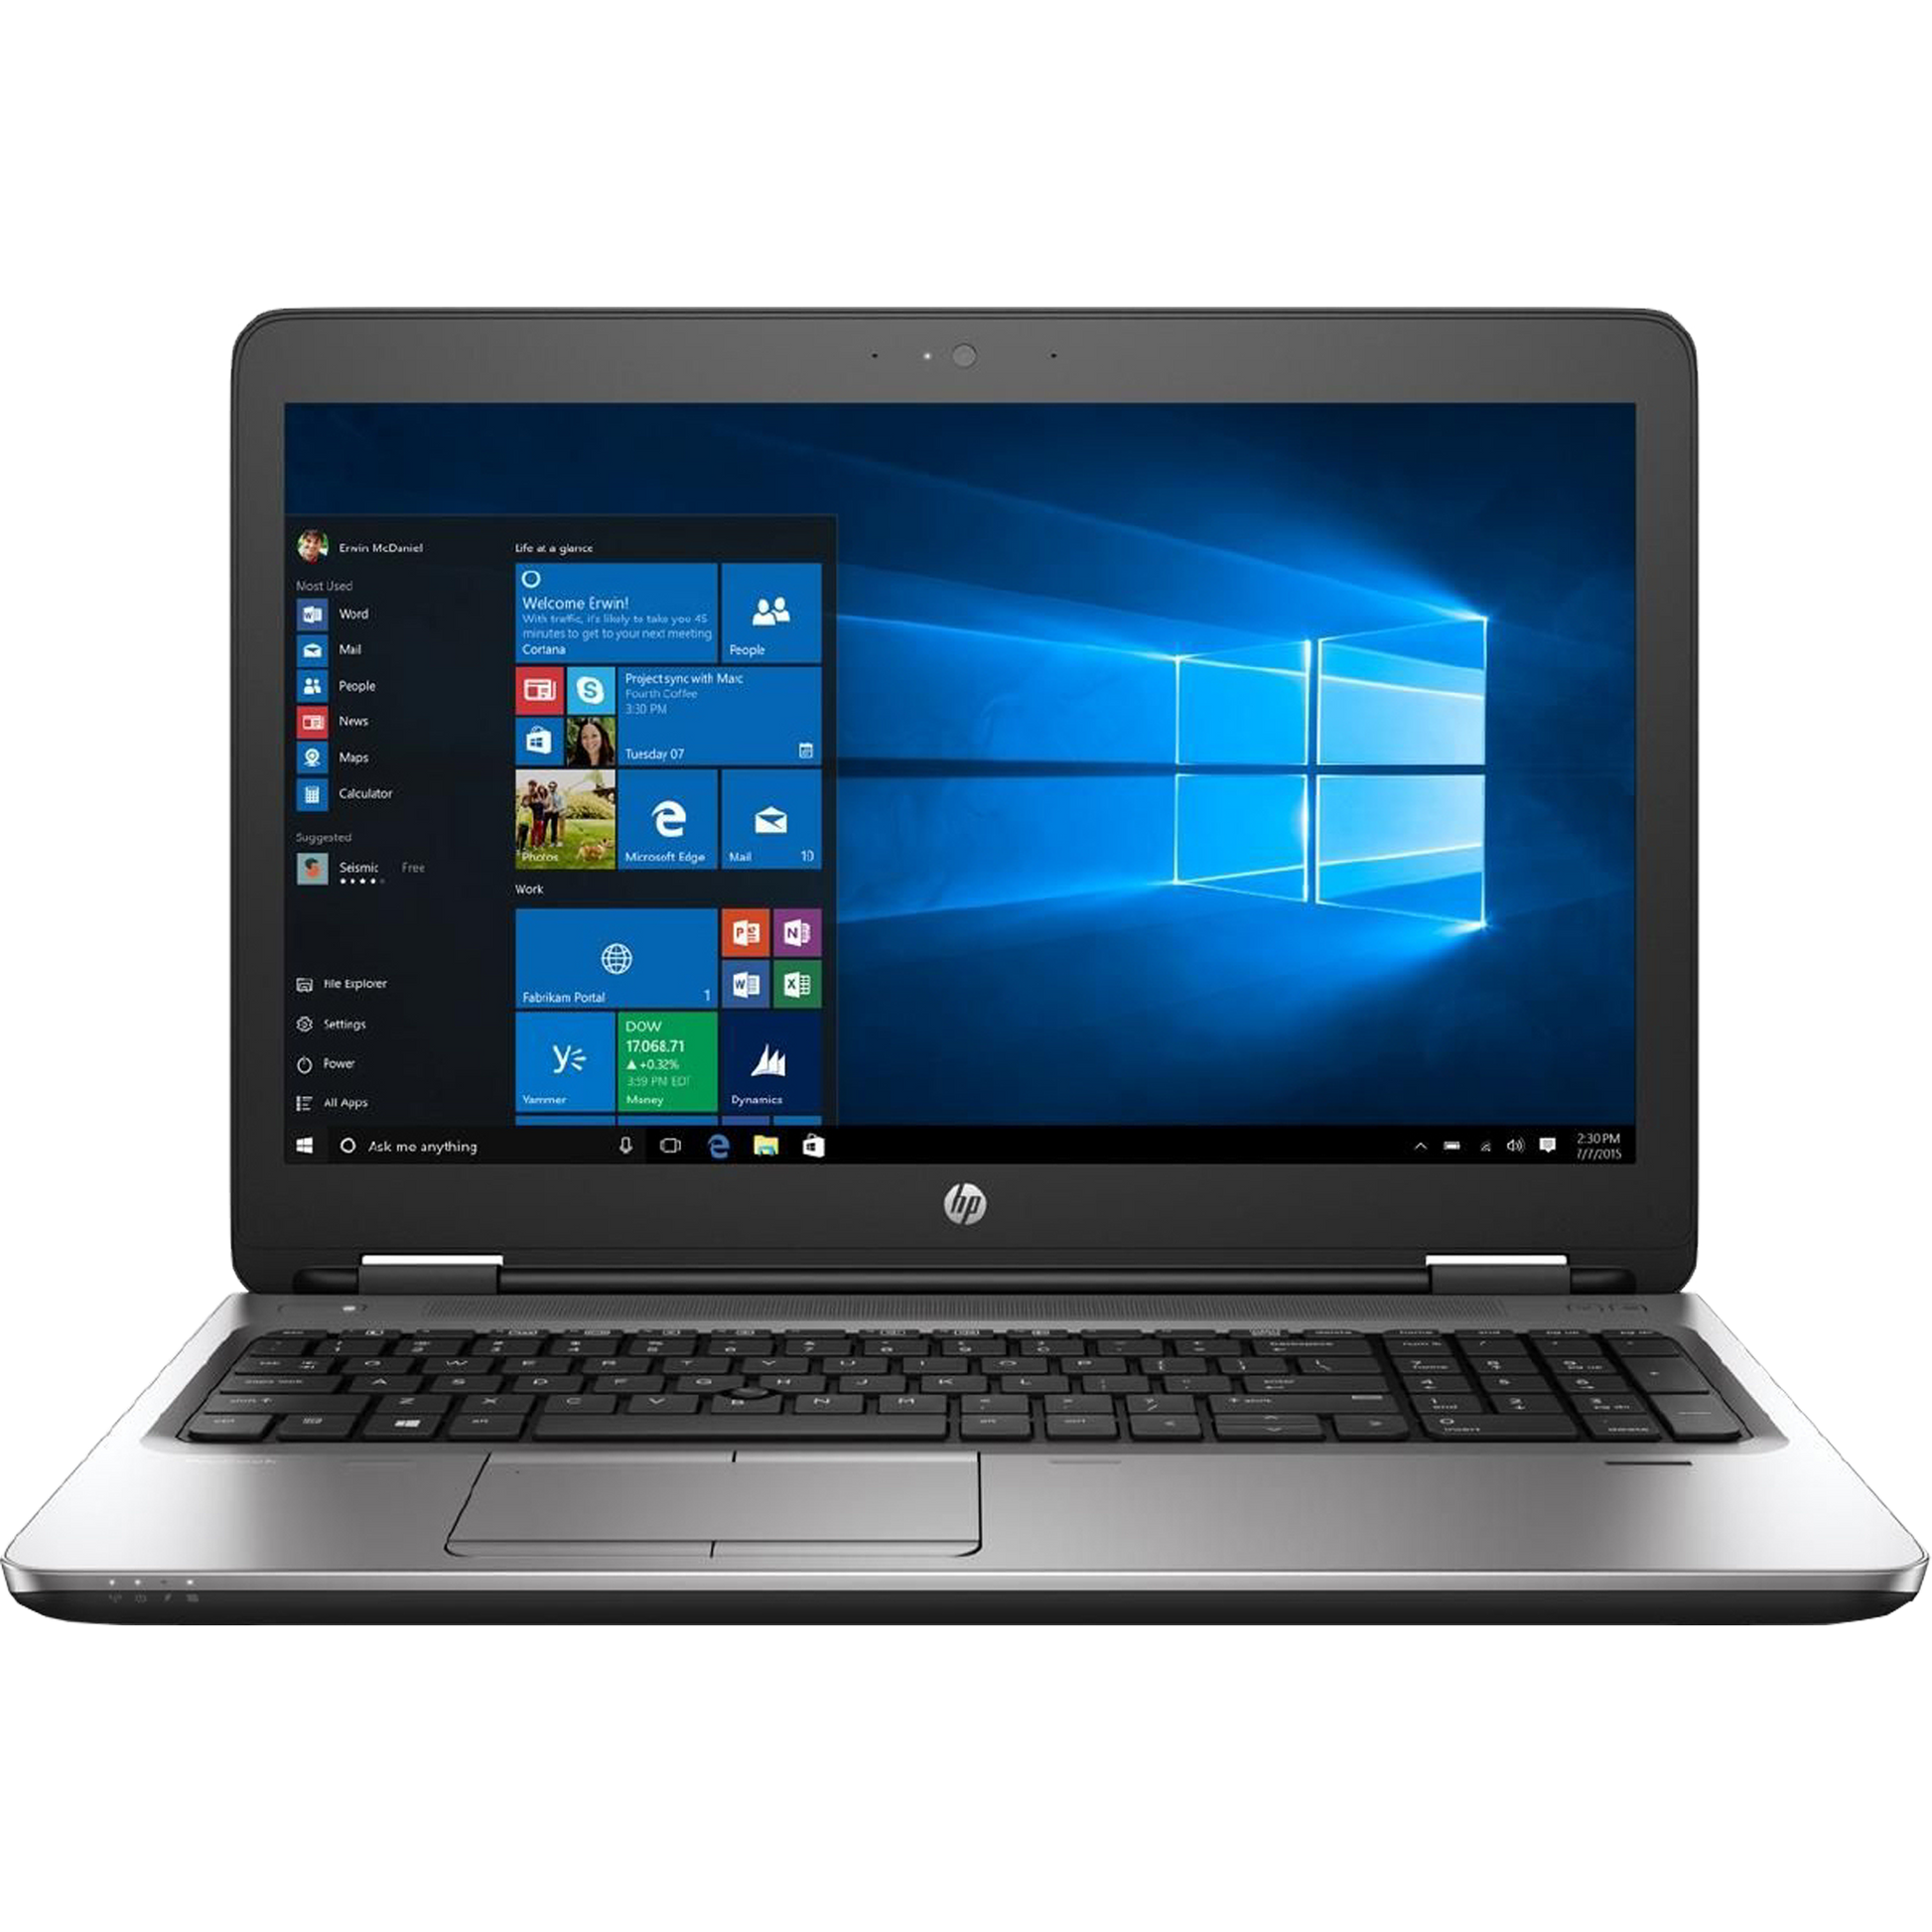 HP EliteBook 650 G3 Intel i5, 6th Gen Ultrabook Laptop with 16GB Ram Laptops - Refurbished